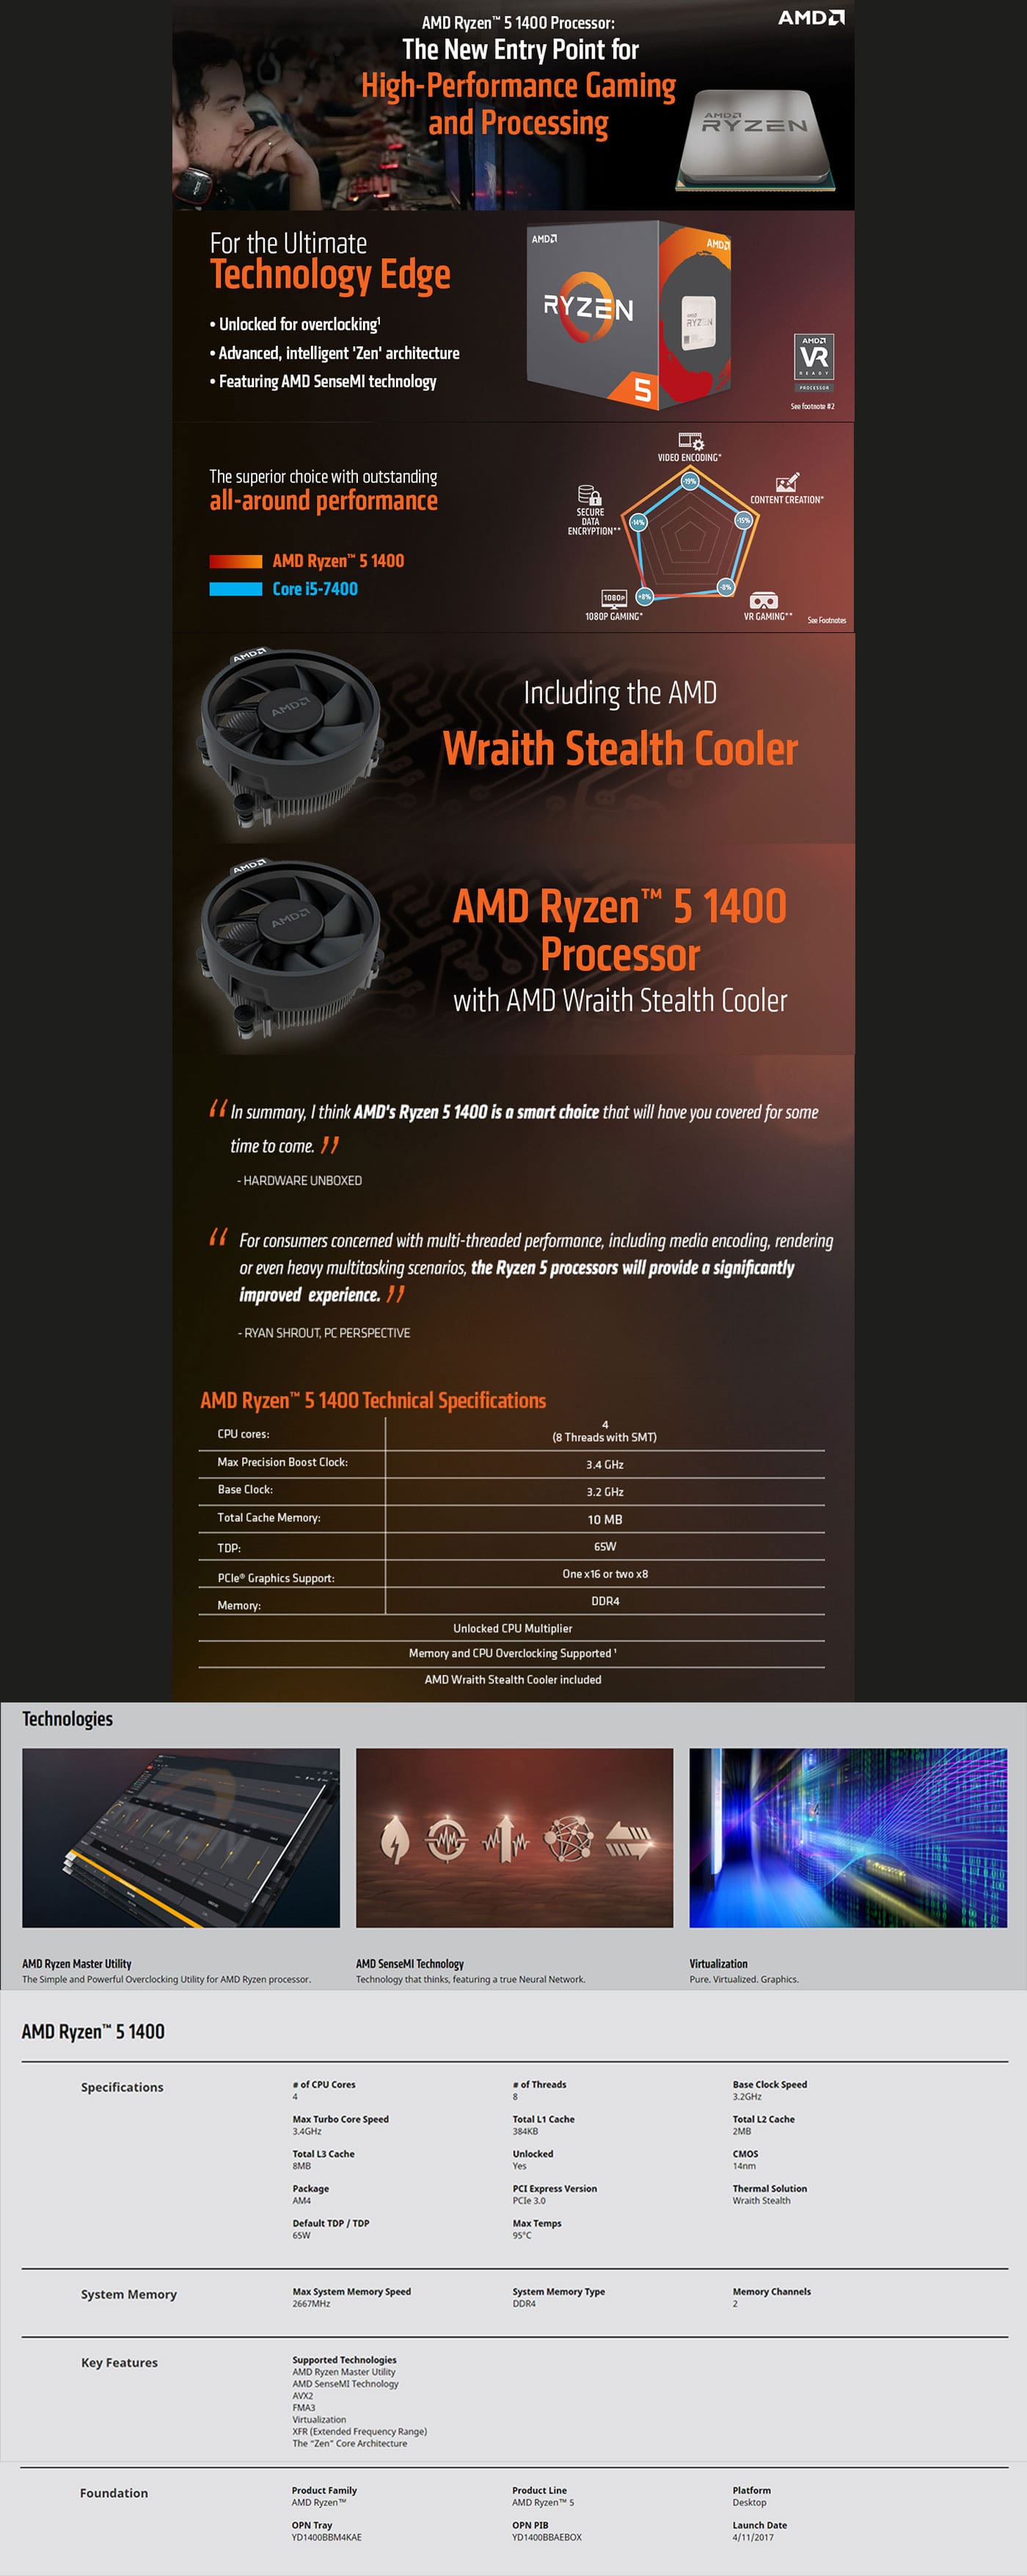 AMD Ryzen 5 1400 3.2 GHz Processor features